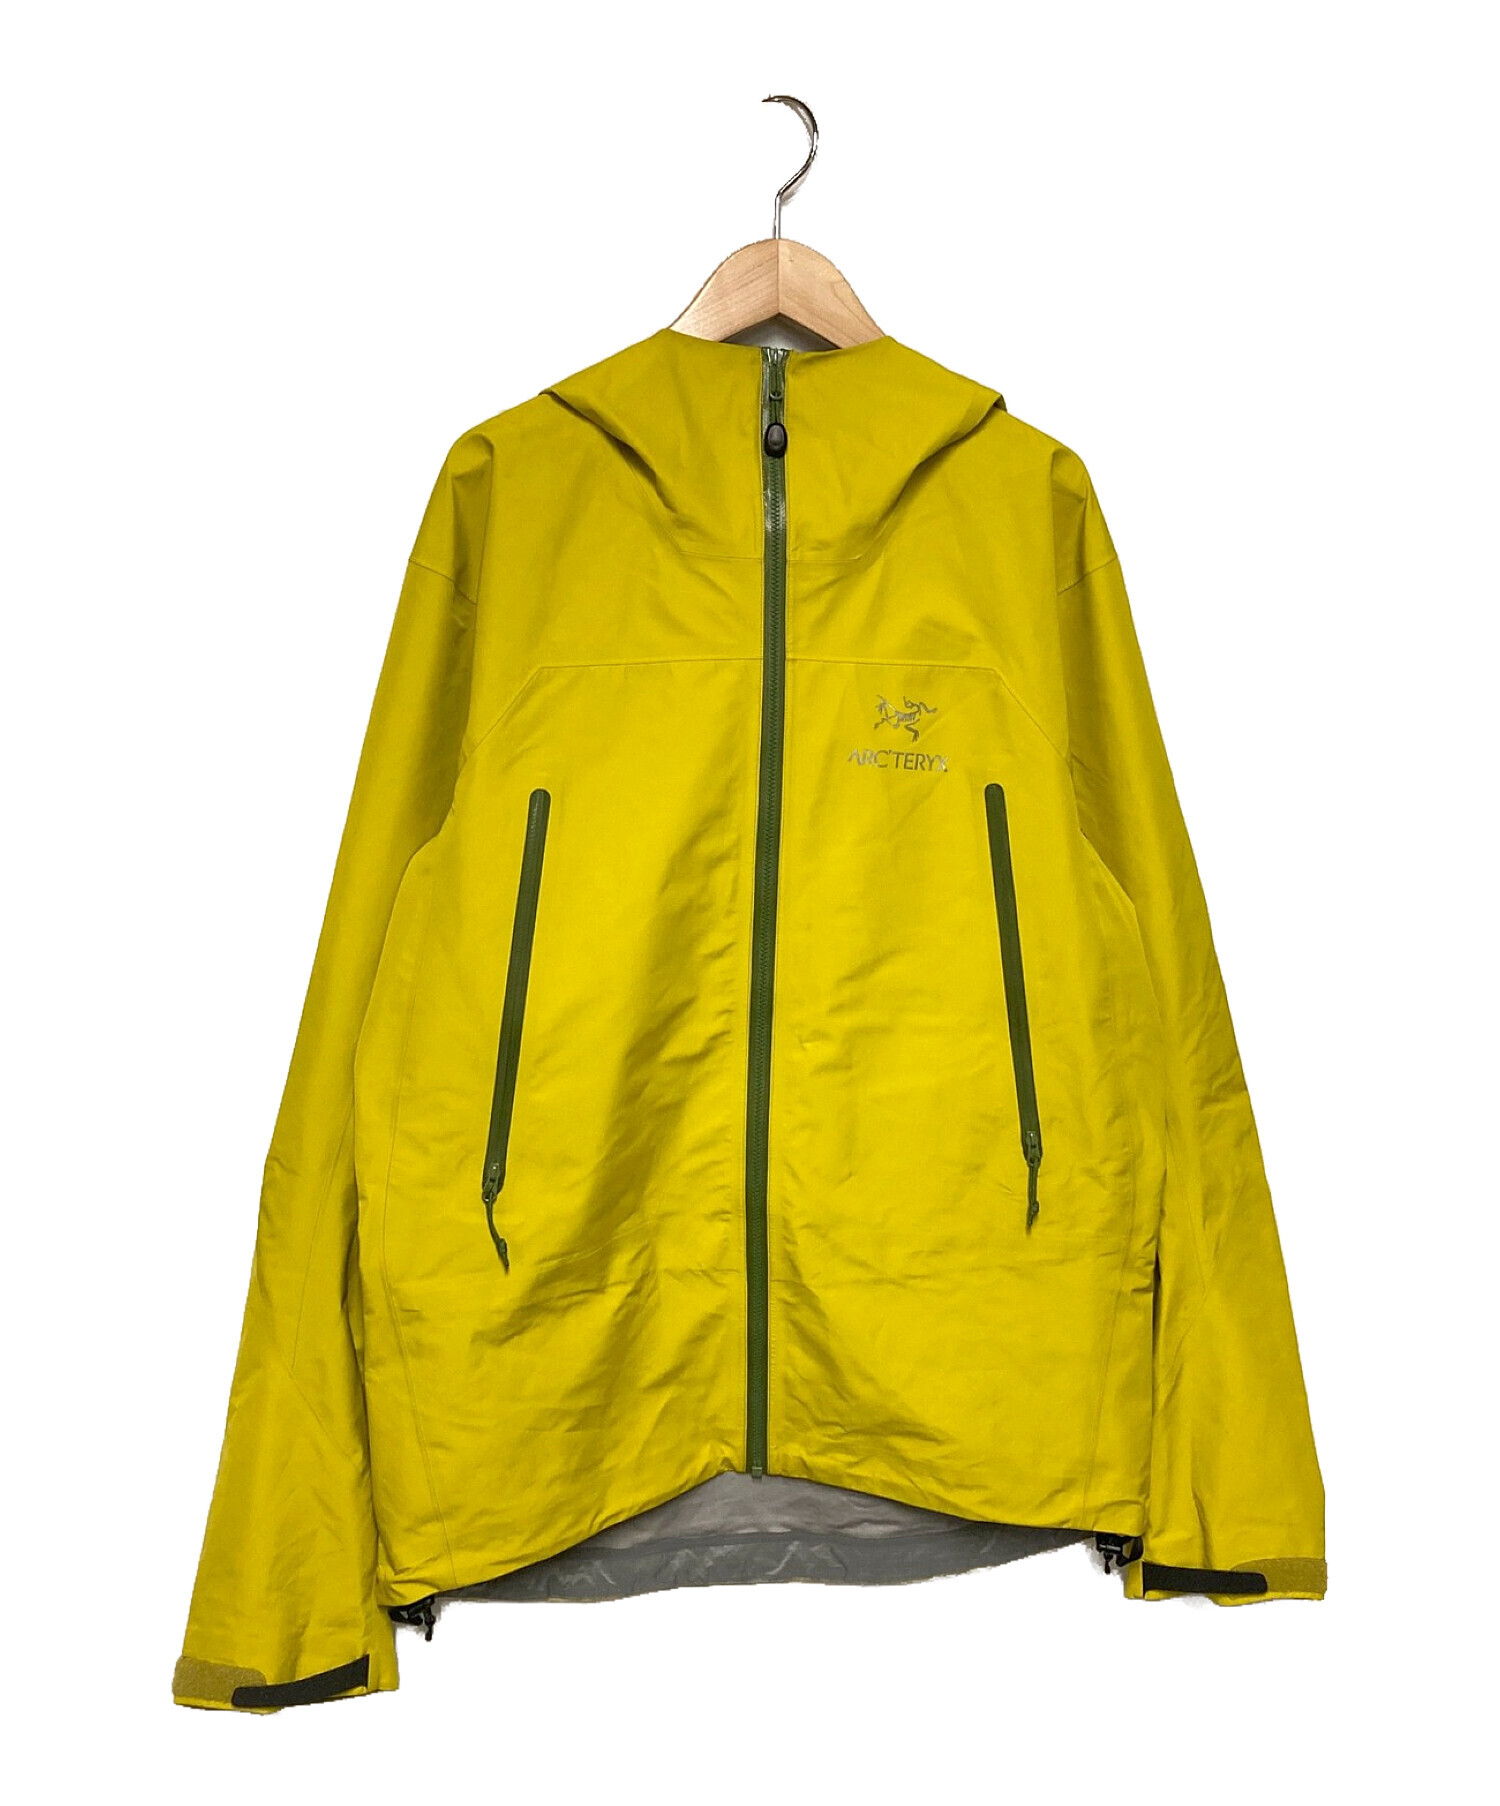 ARC'TERYX zeta lt jacket アークテリクス サイズs - 登山用品